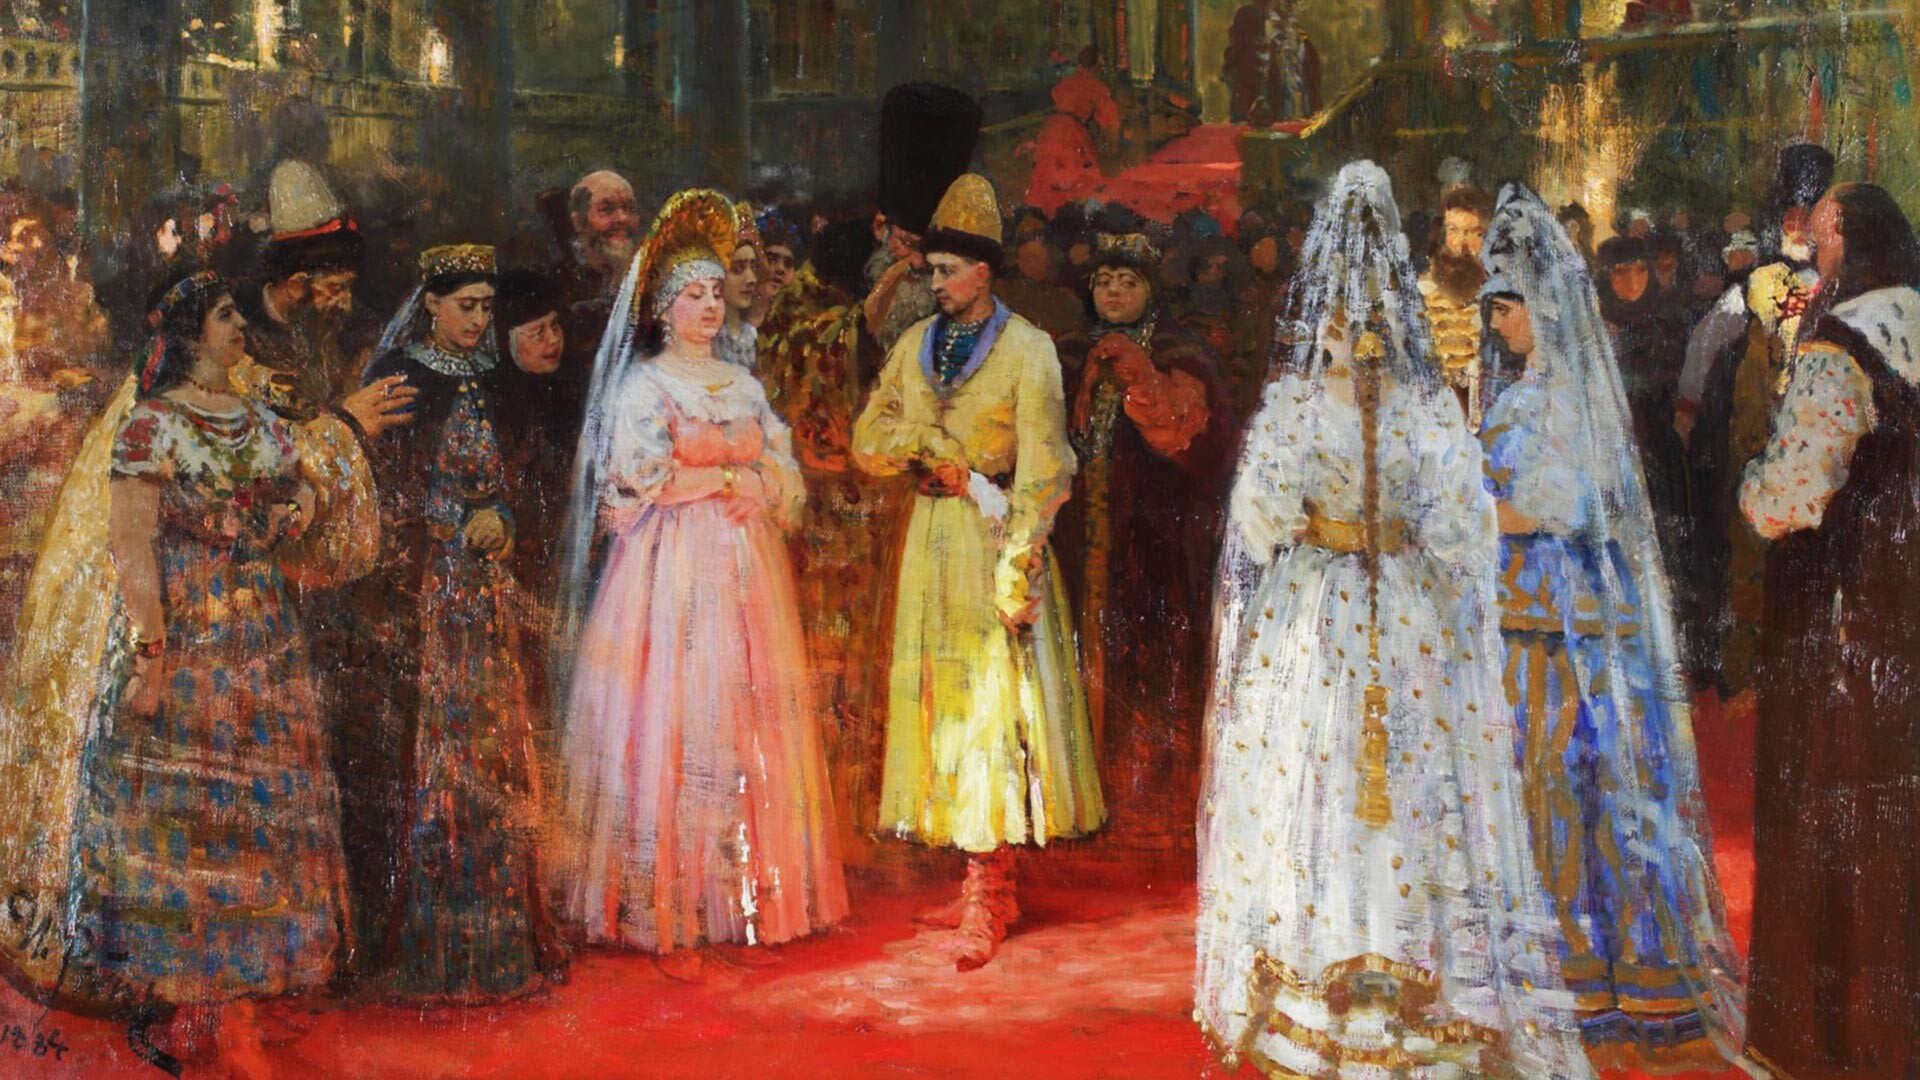 “Pertunjukan pengantin untuk pangeran agung” oleh Ilya Repin, 1884.